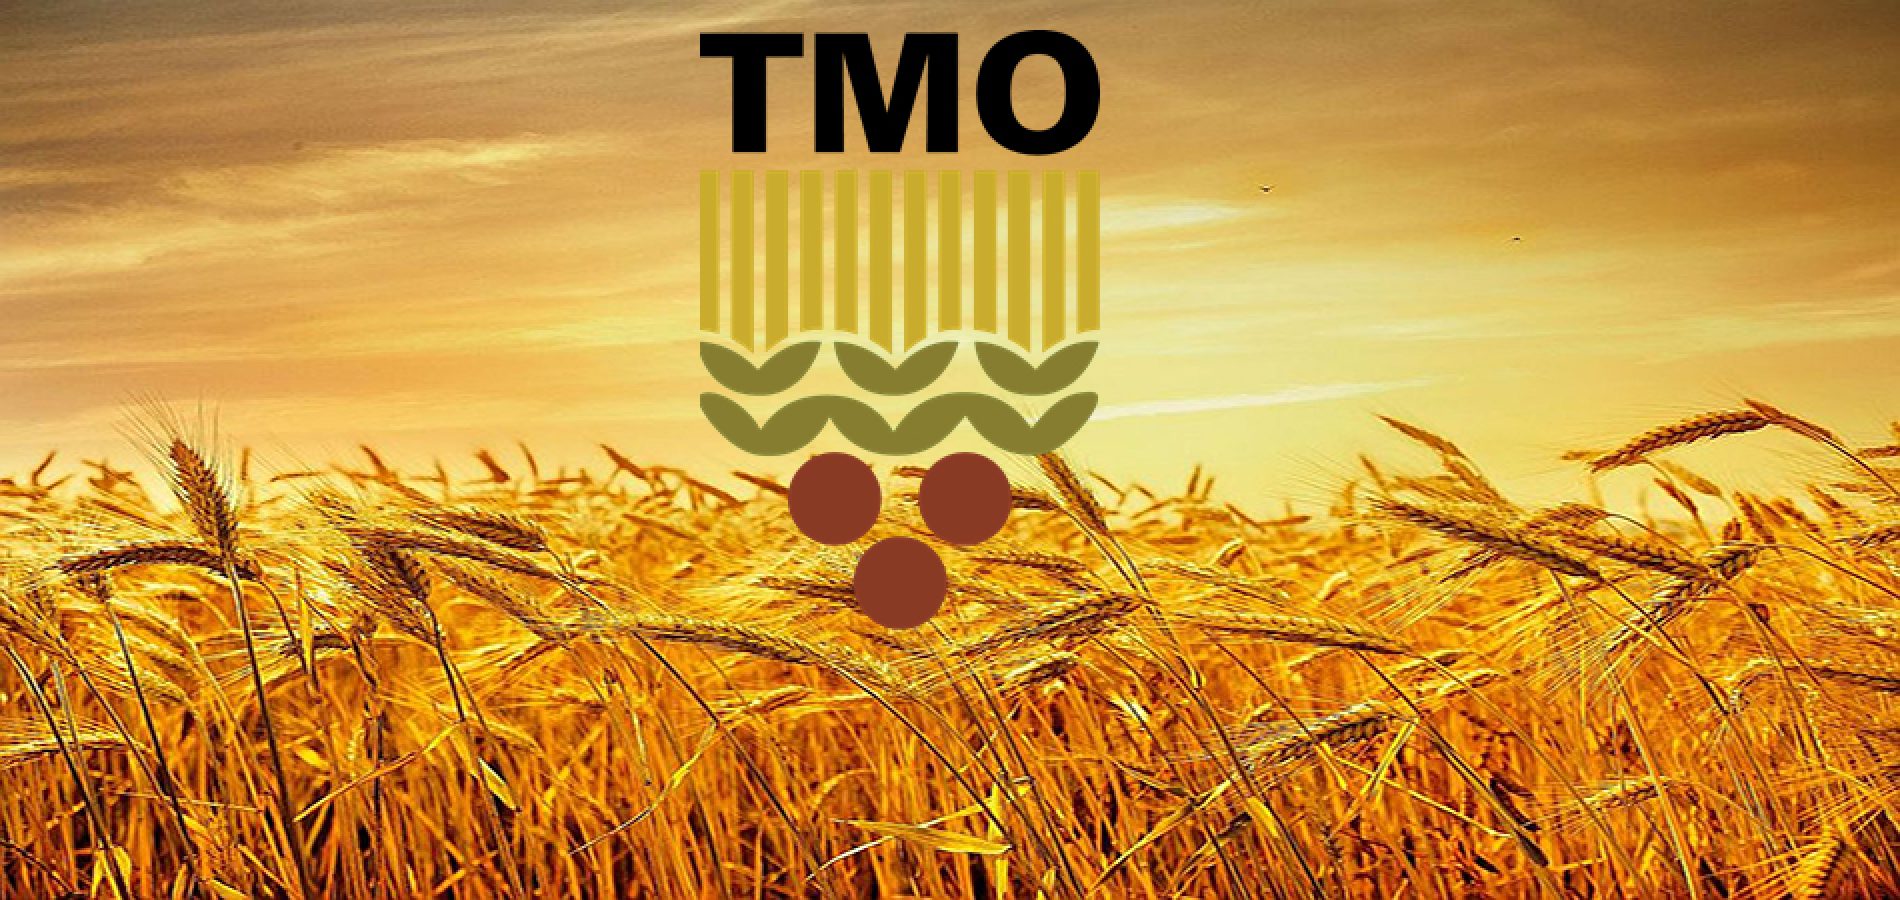 TMO Arpa ve Mısır Satışı